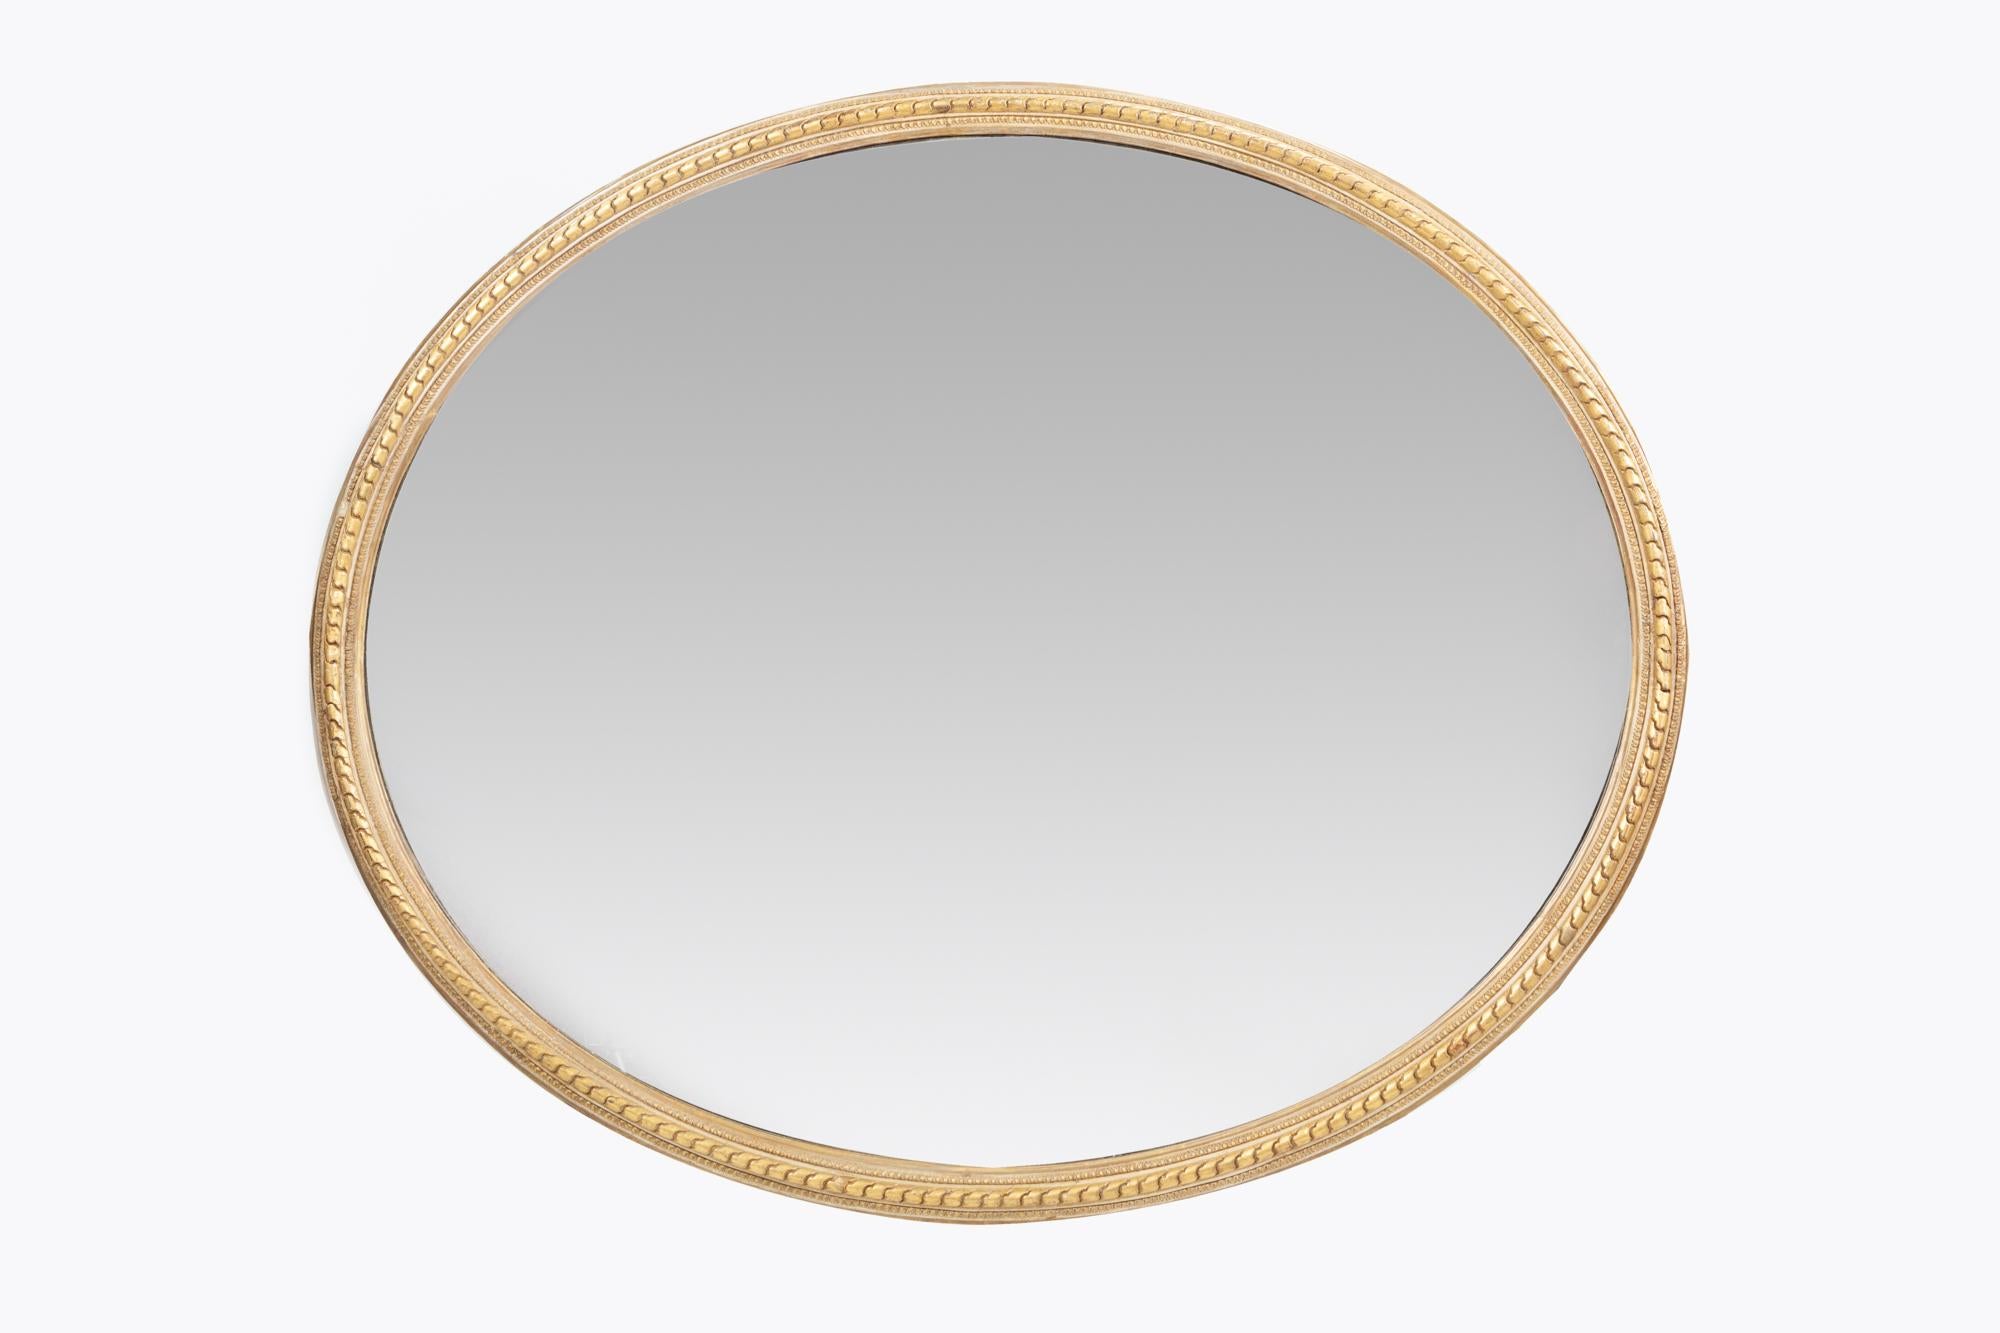 19th century oval gilt mirror.